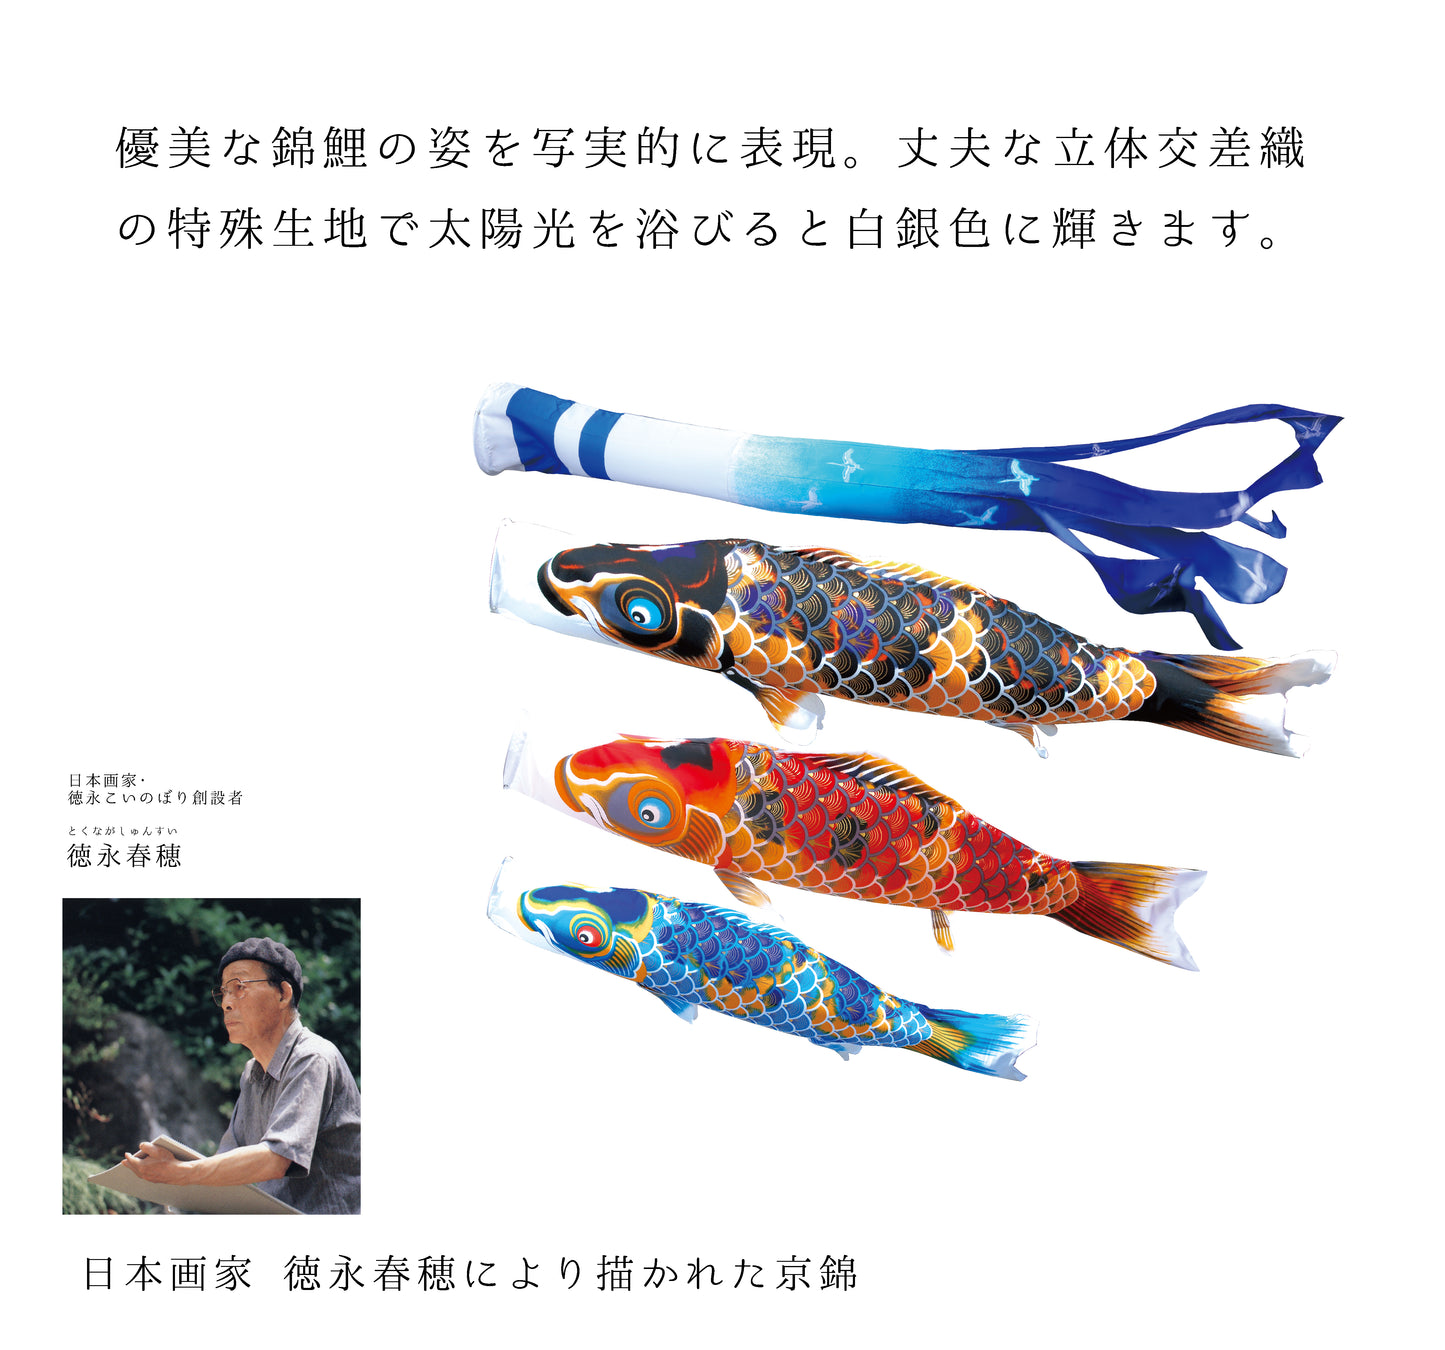 Present hand-dyed Yuzen carp [Kyo Nishiki] 6-piece garden set (arrow, rope + pole) in gift box Tokunaga carp streamer garden set 